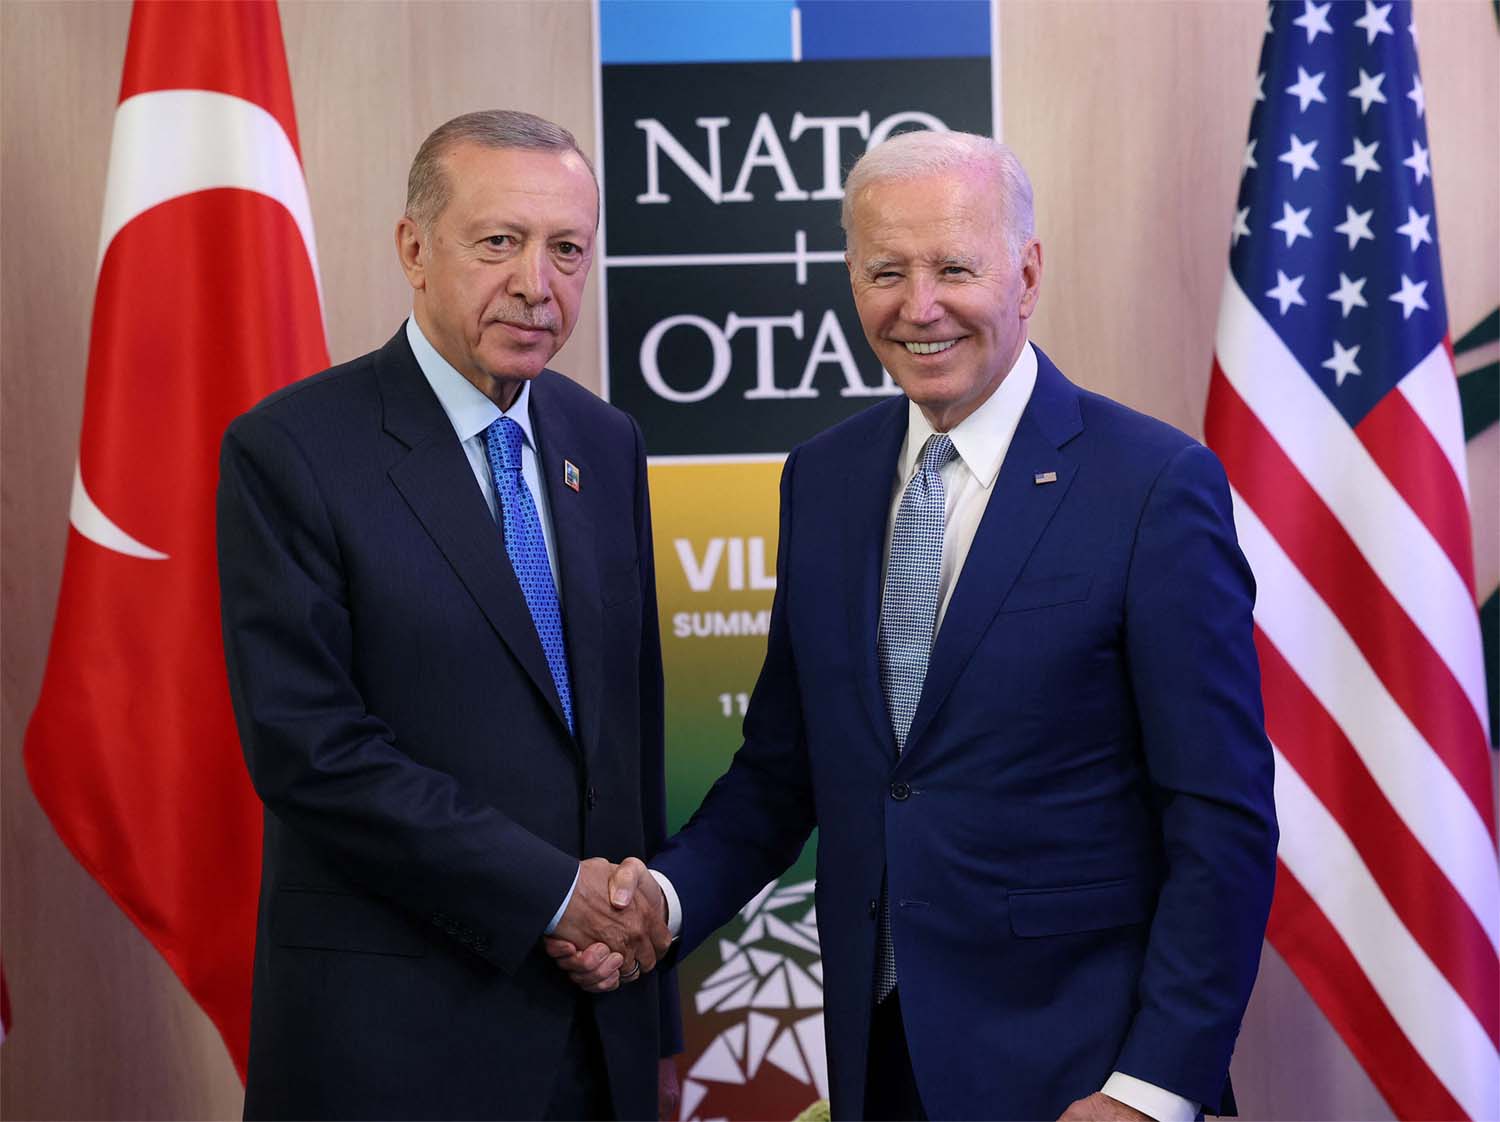 Biden and Erdogan also discussed regional issues of shared interest